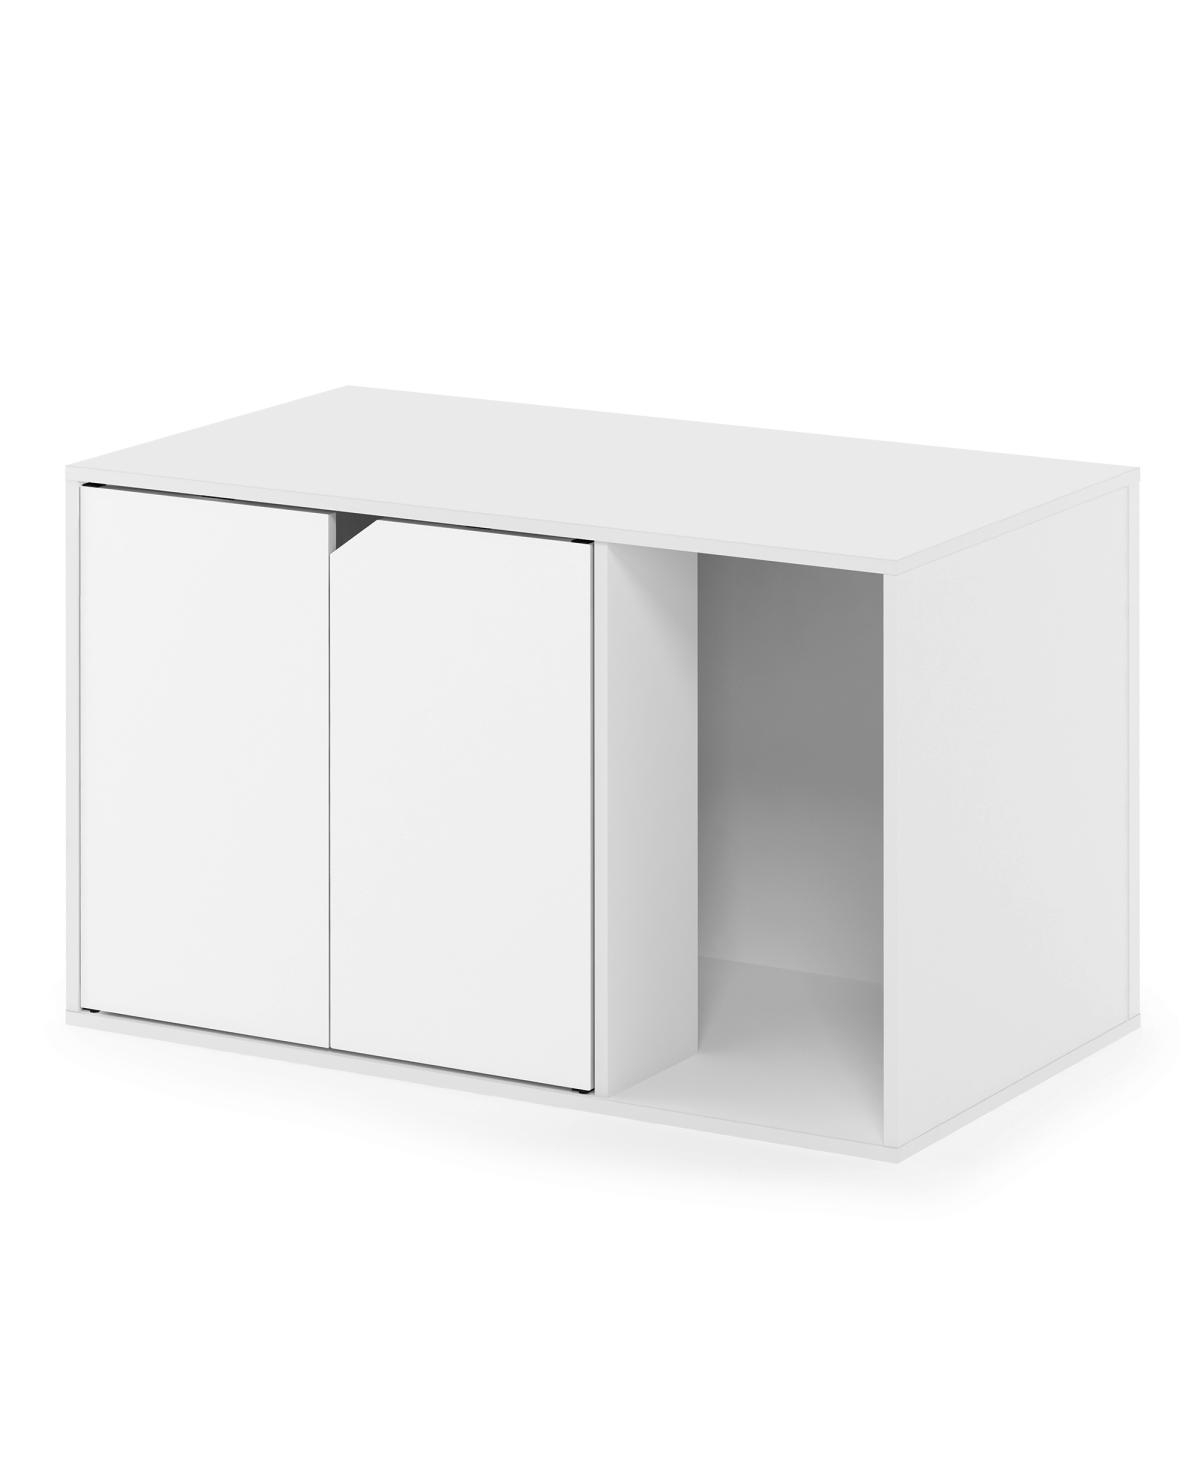 Peli Pet Litter Box Enclosure, Solid White - White